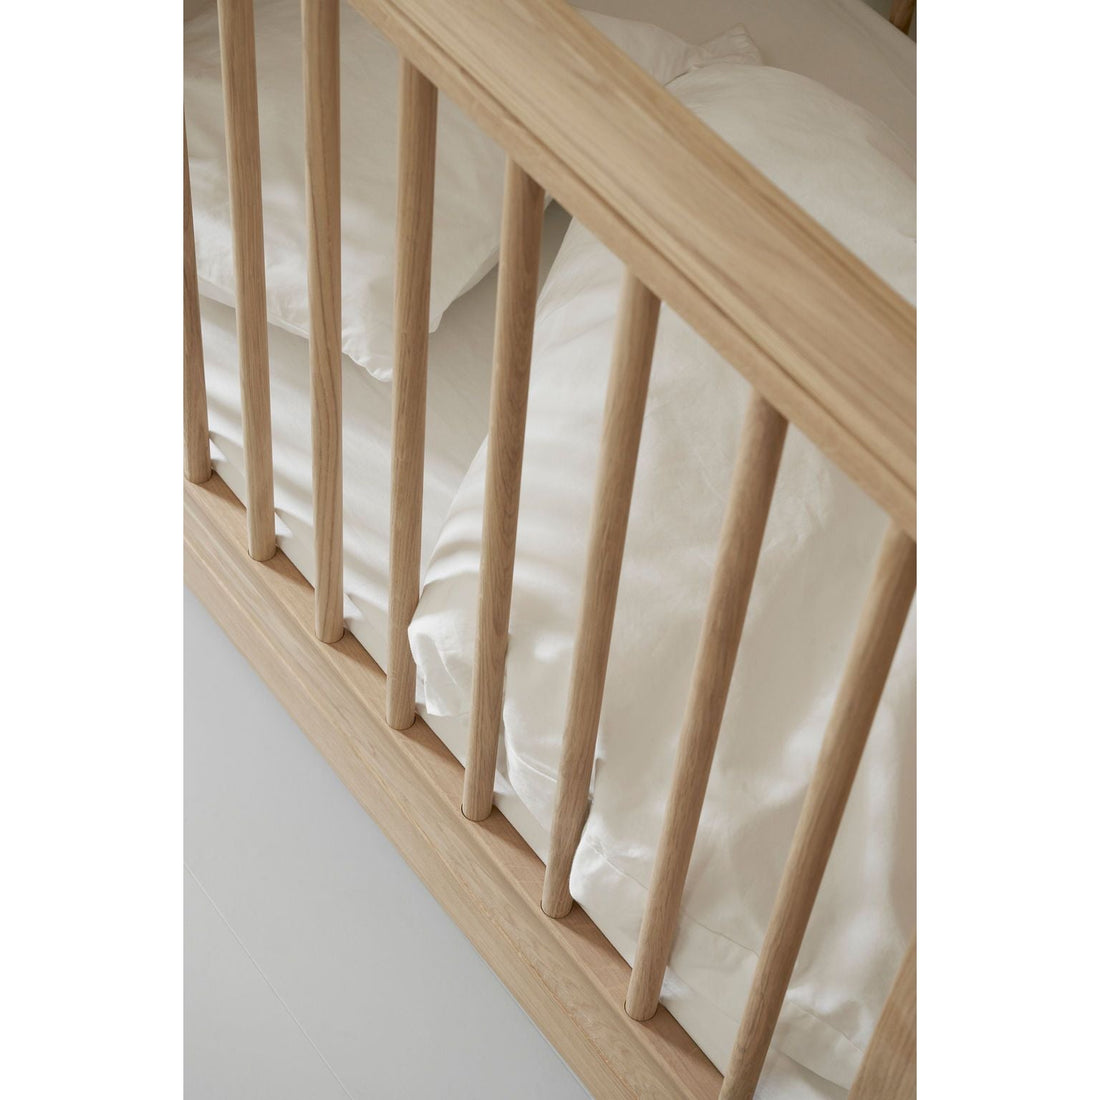 Oliver Furniture Wood Mini+ Cot Bed (Without Junior Conversion Kit) - Oak (Pre-Order; Est. Delivery in 6-10 Weeks)